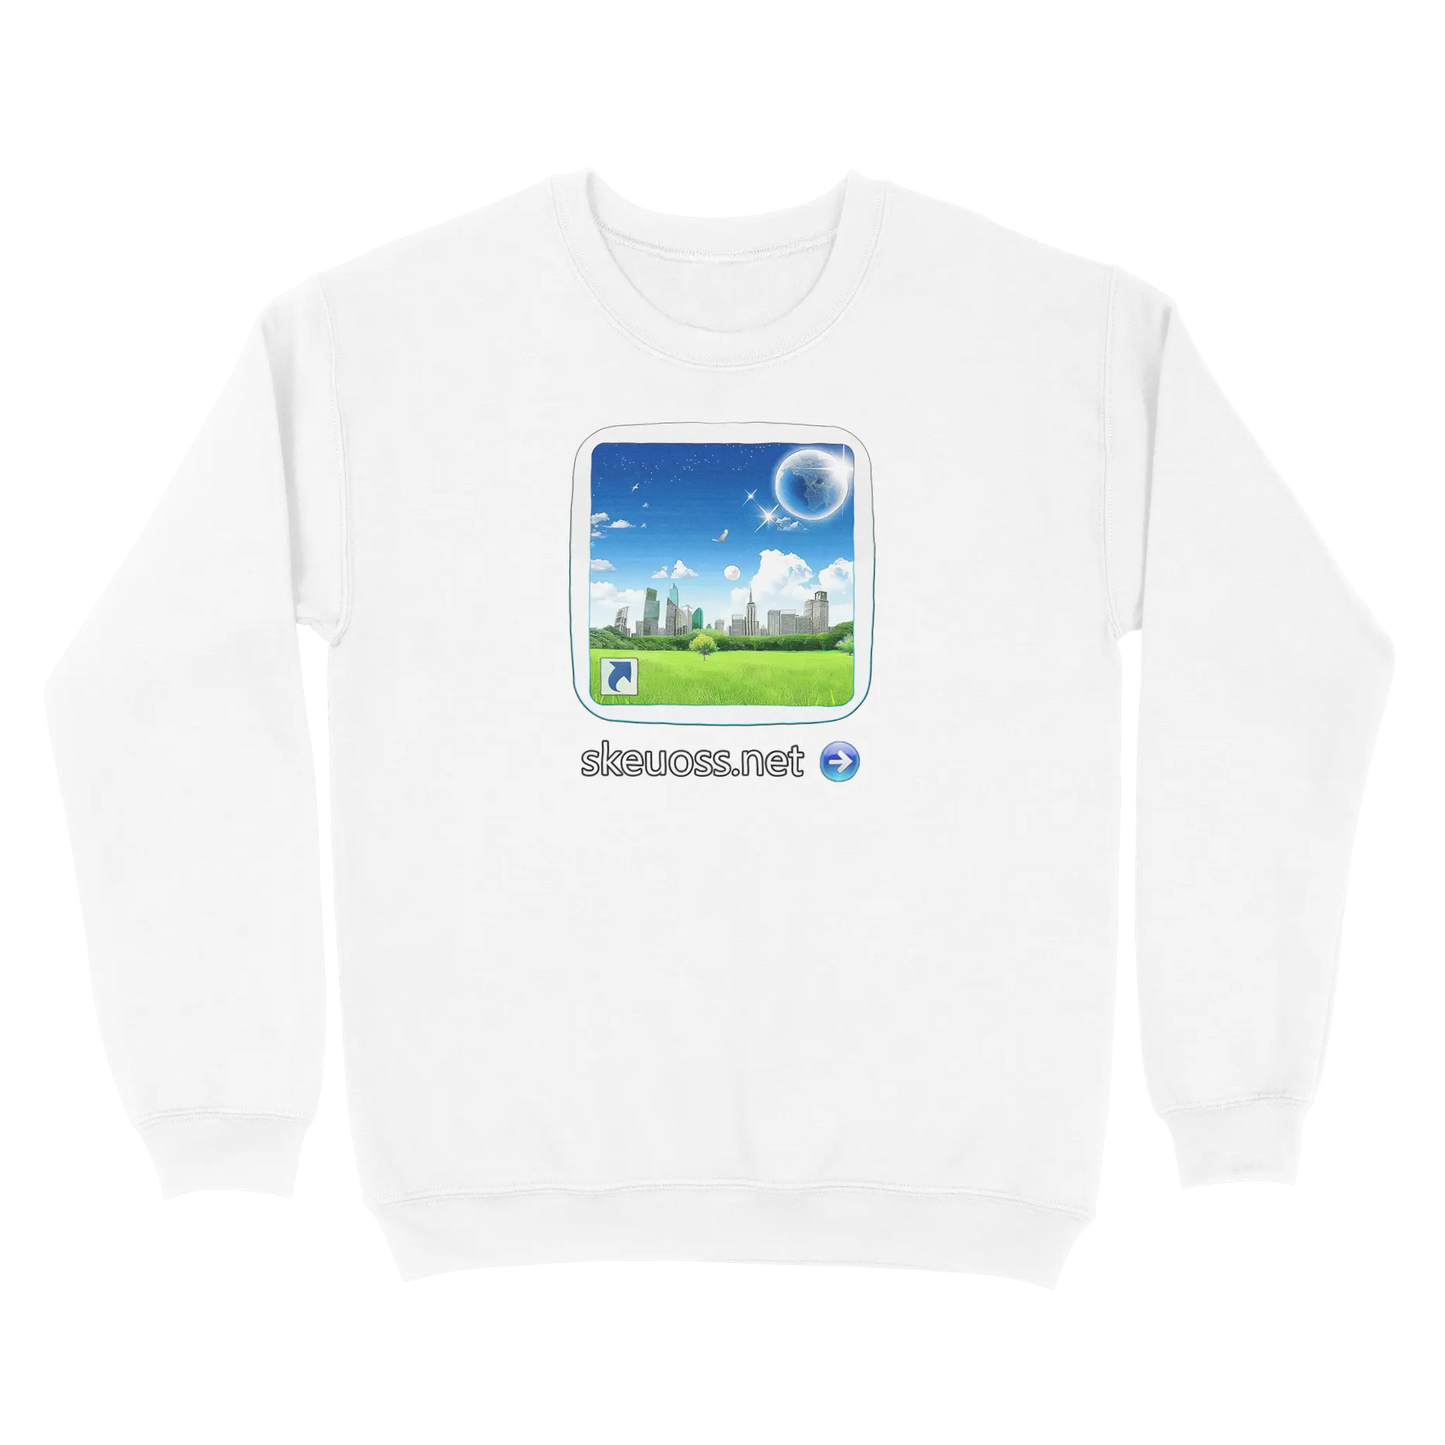 Frutiger Aero Sweatshirt - User Login Collection - User 352